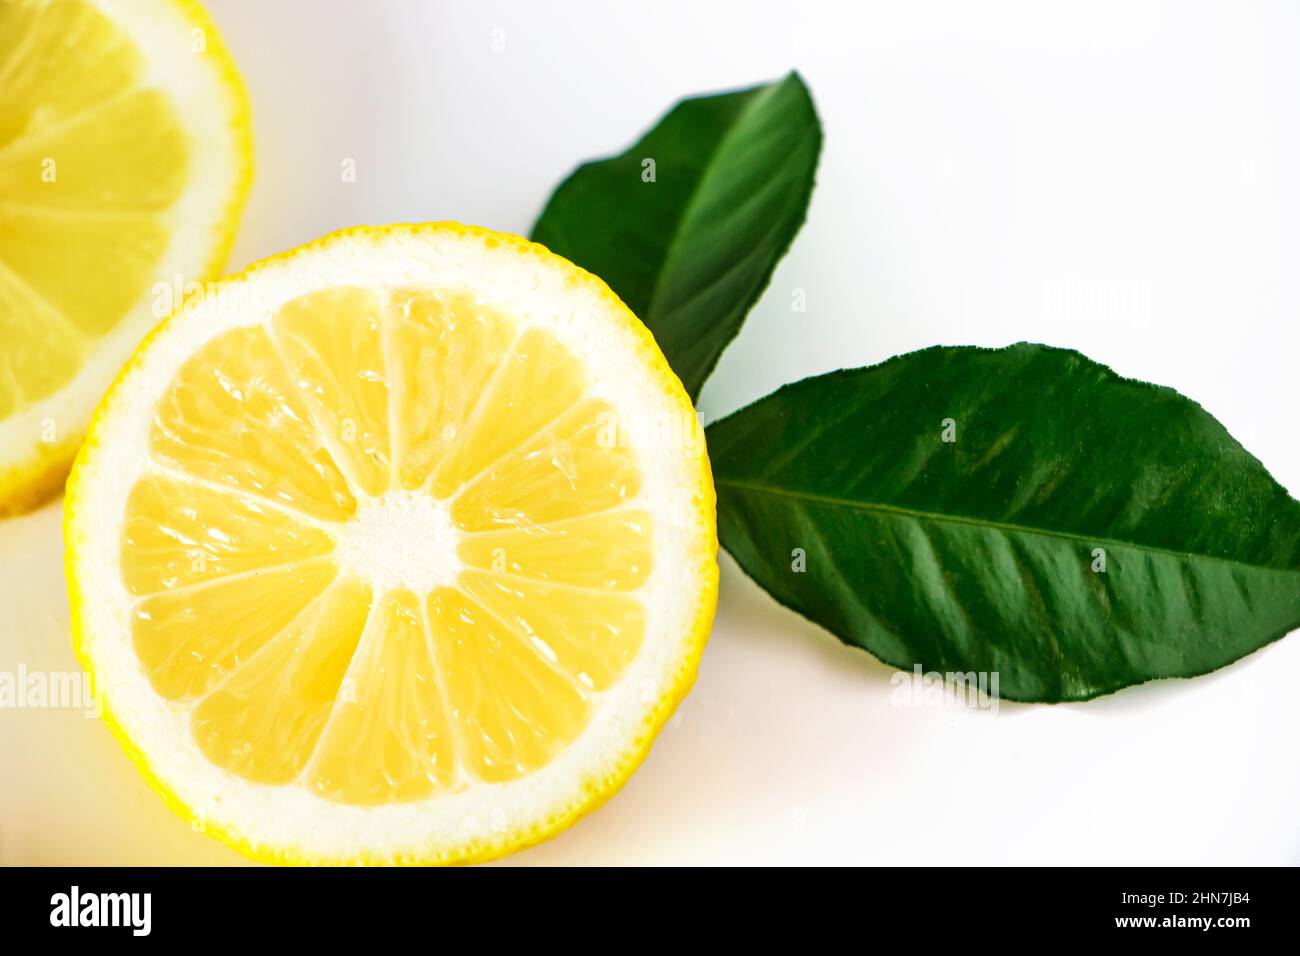 Fresh juicy lemon slices on white background. Citrus fruit high in vitamin C. Antioxidant for healthy diet. Stock Photo